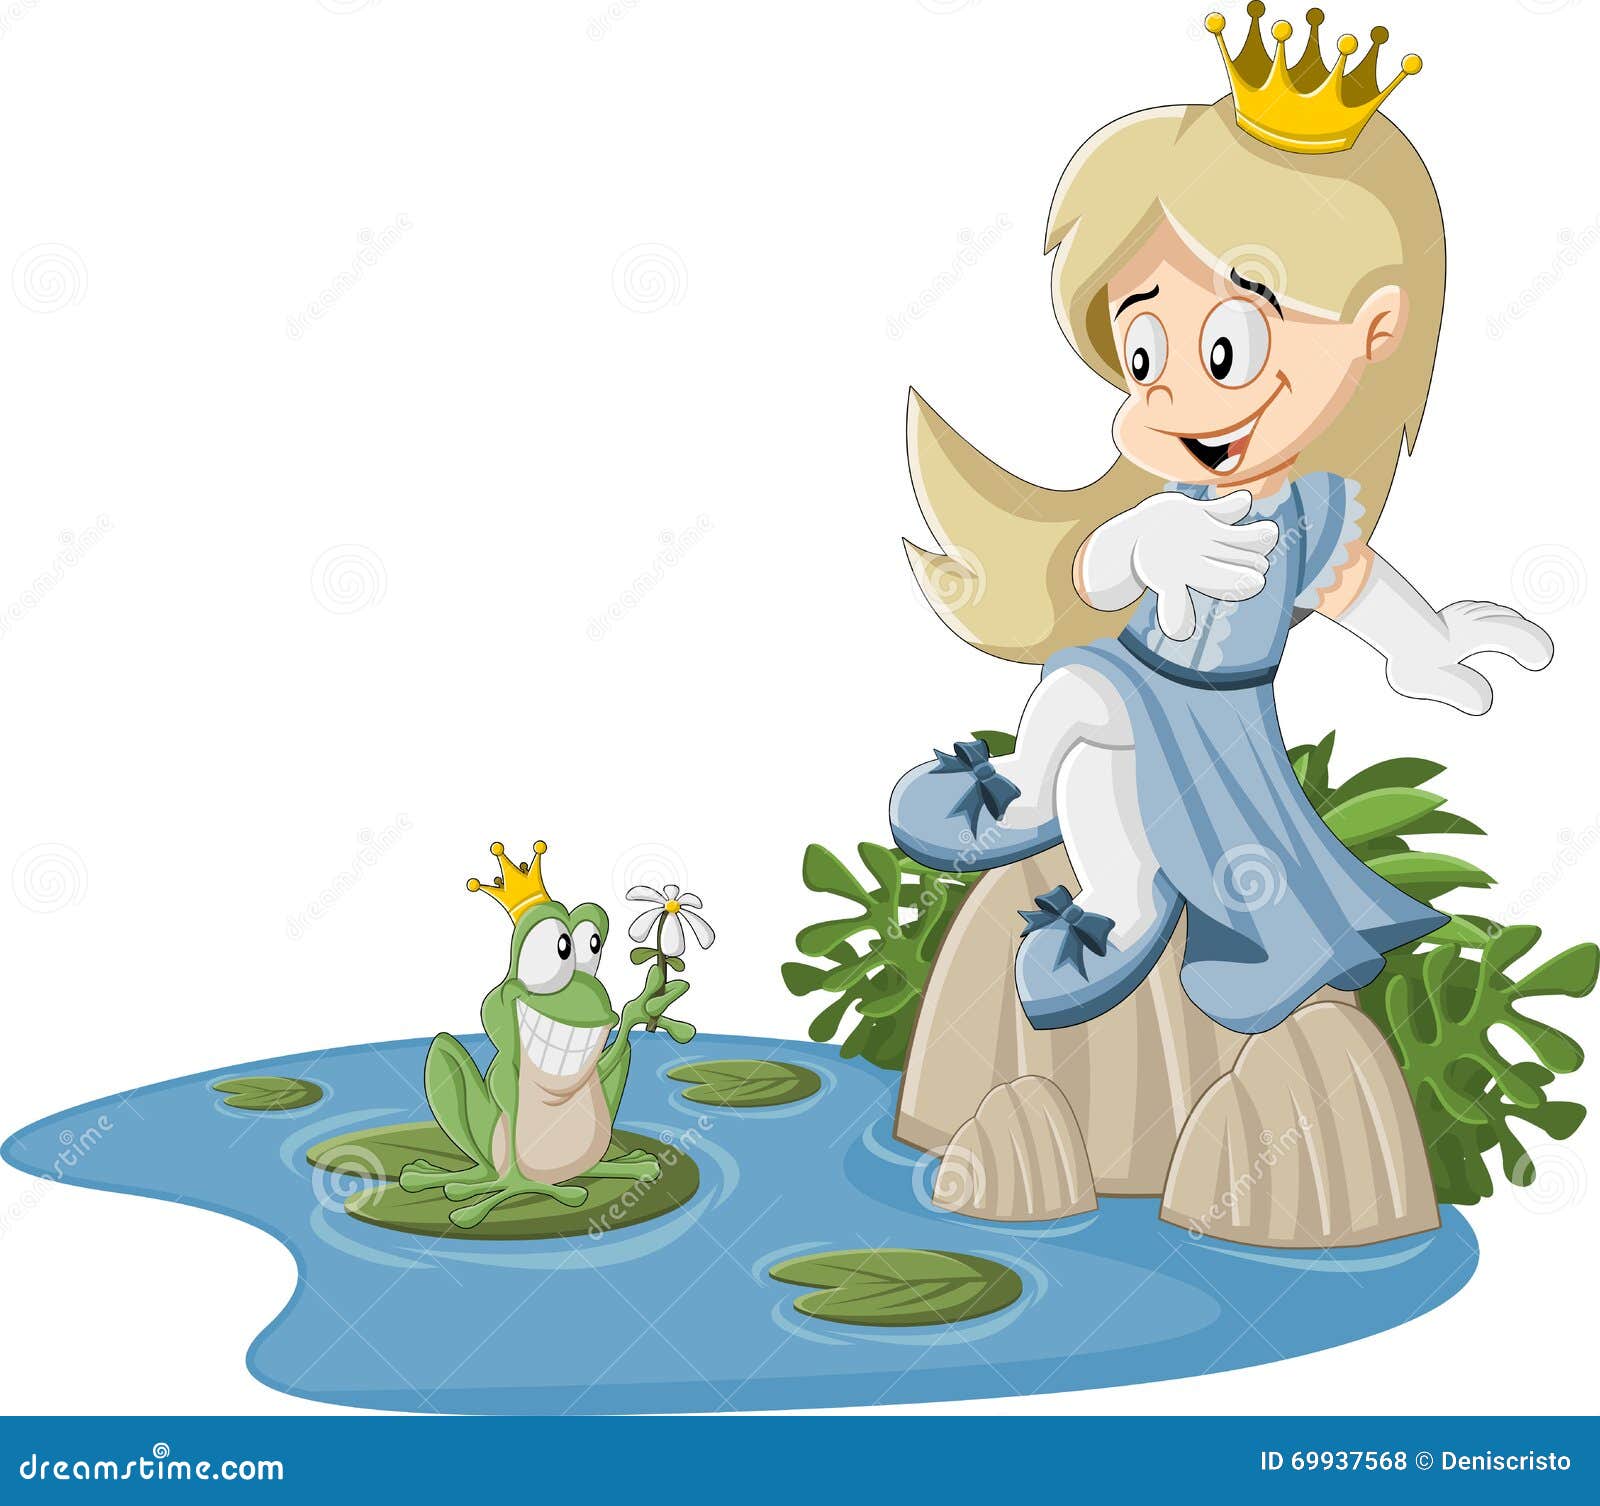 Cartoon princess and frog stock vector. Illustration of girl - 69937568